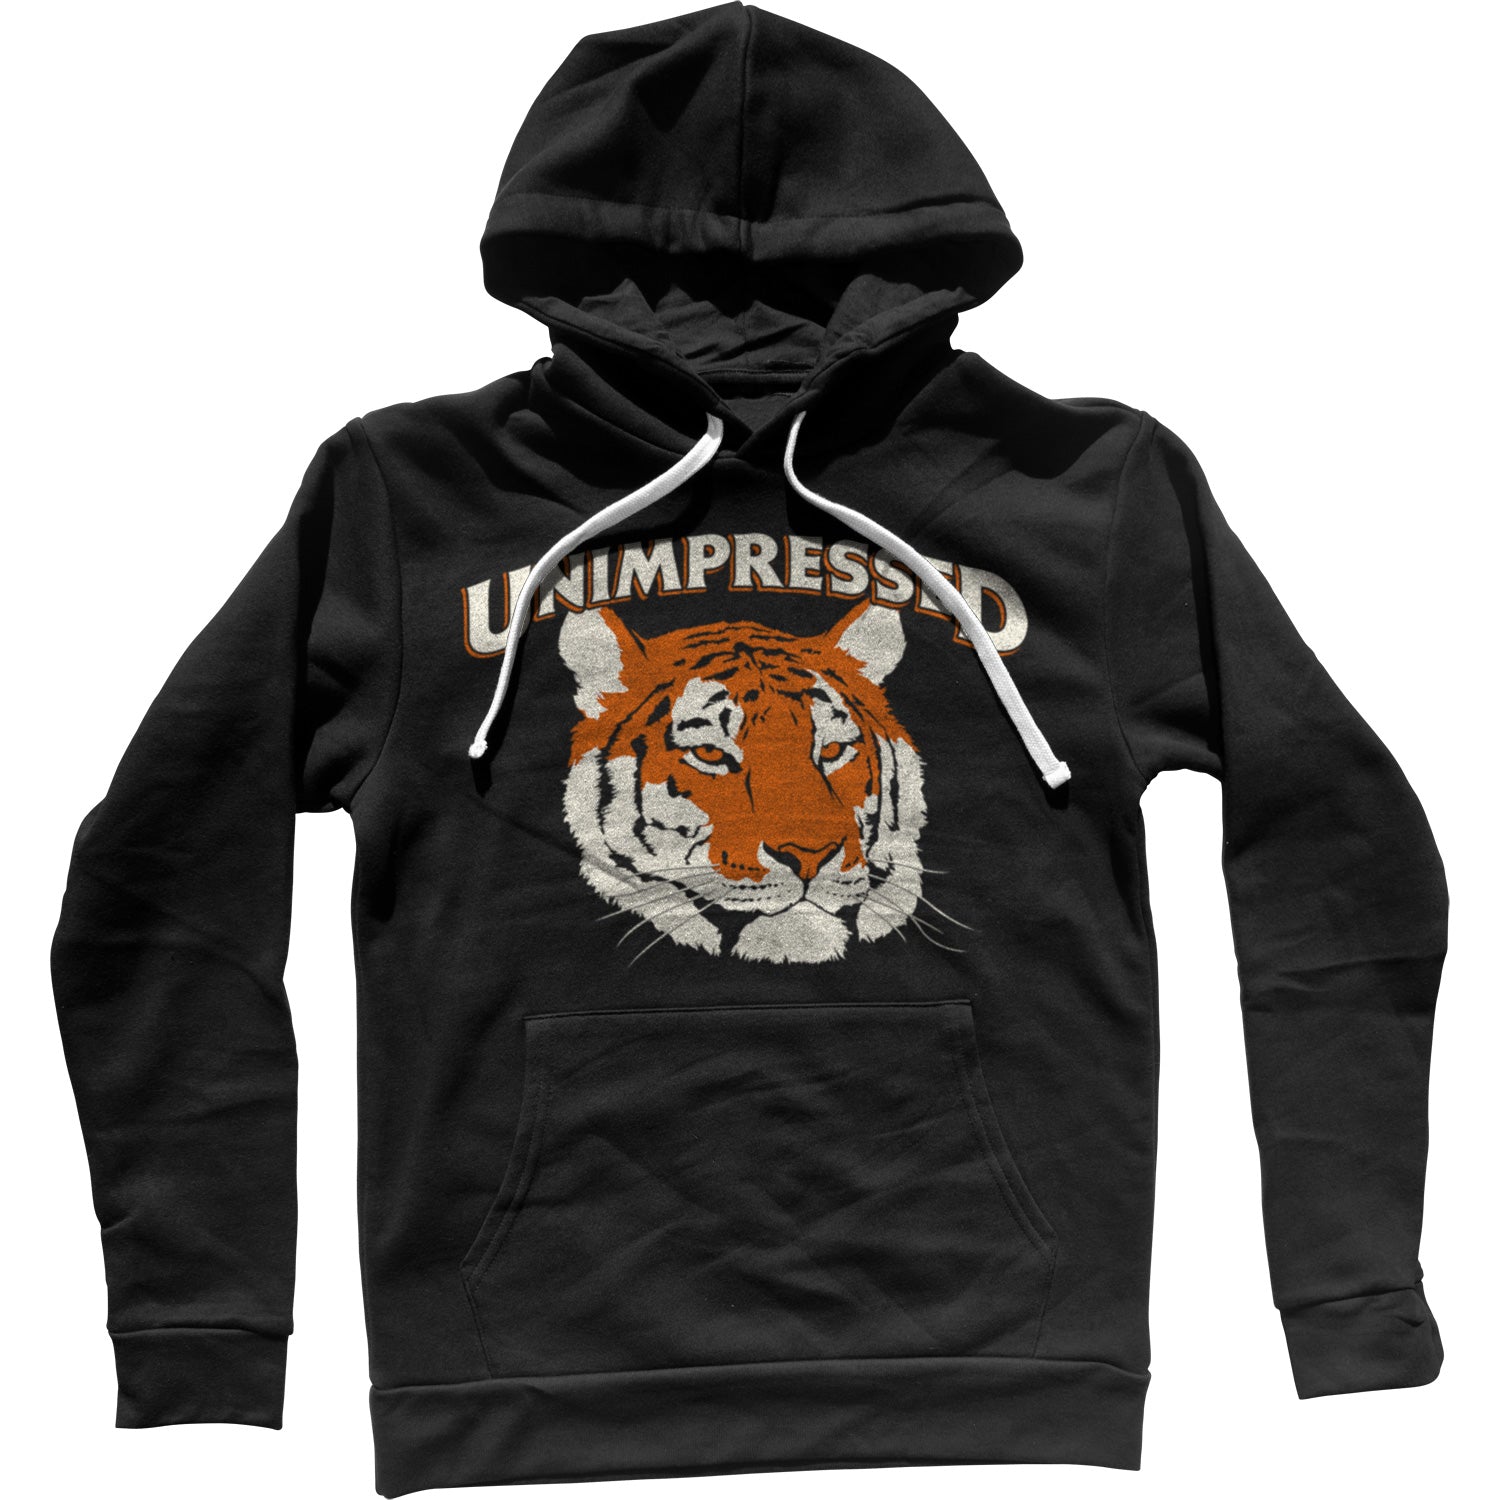 Unimpressed Tiger Unisex Hoodie